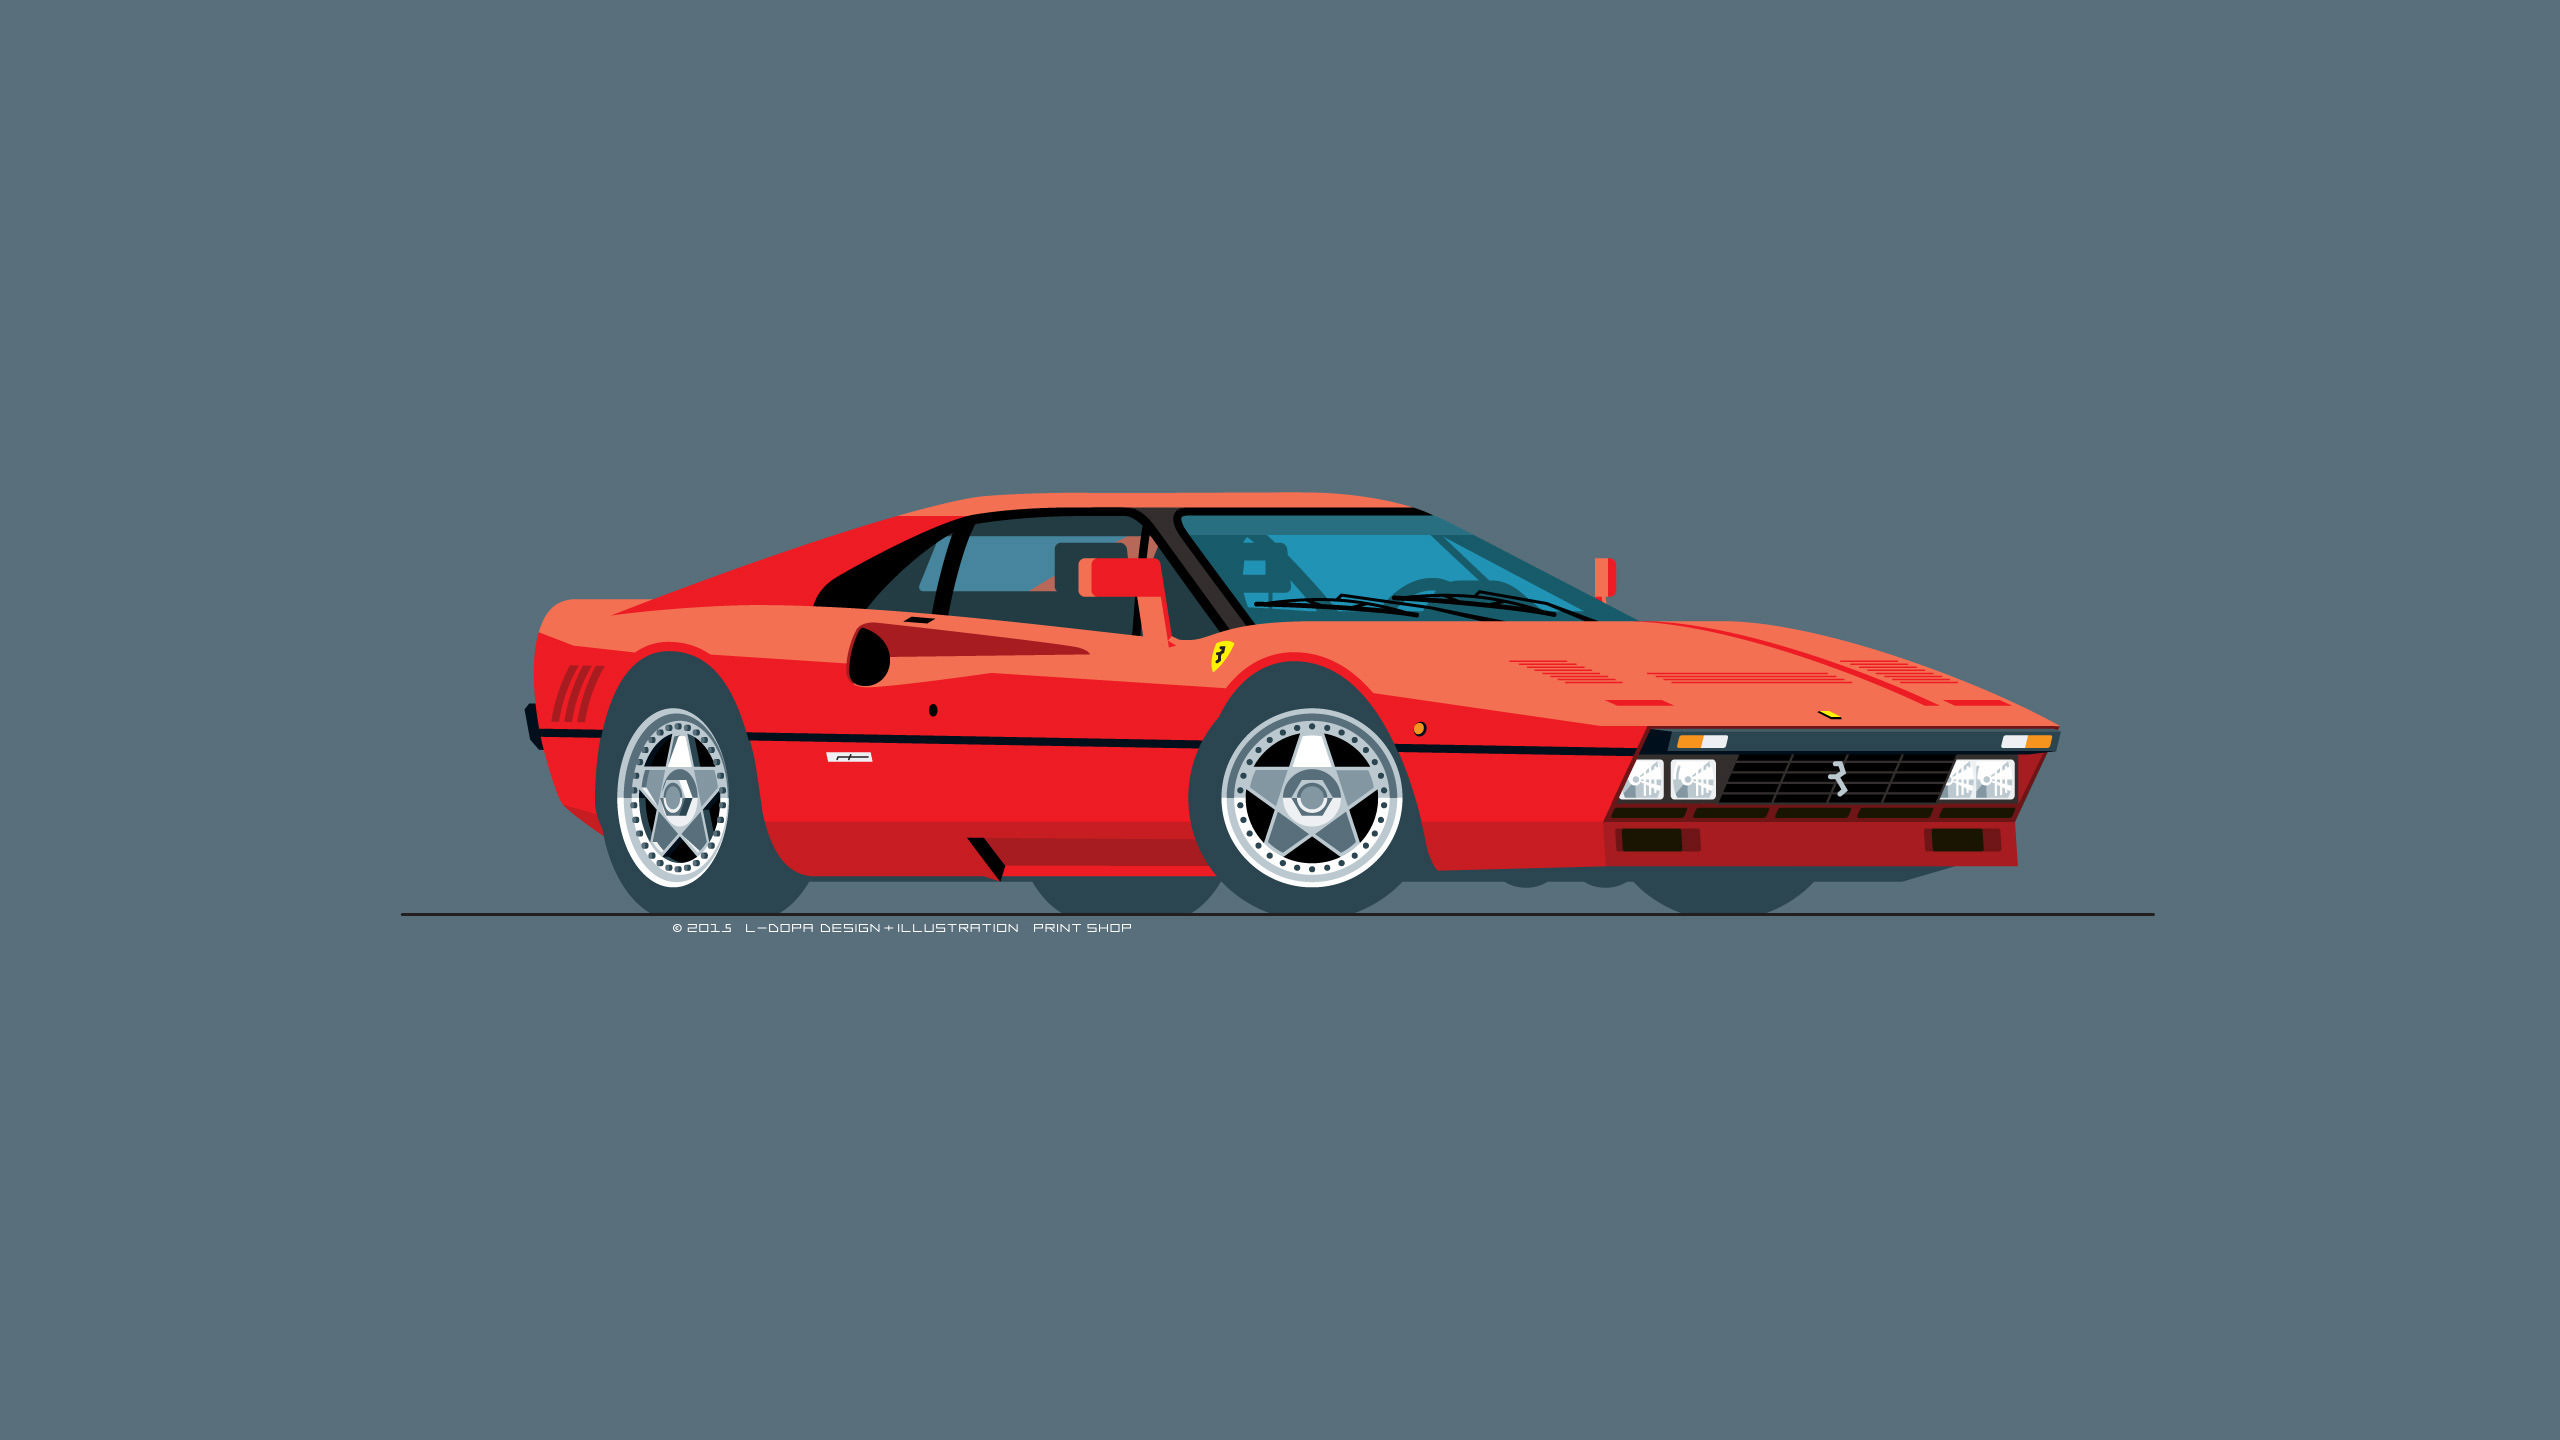 Ferrari, Red, Car, 288 GTO, Flatdesign, Digital art Wallpaper